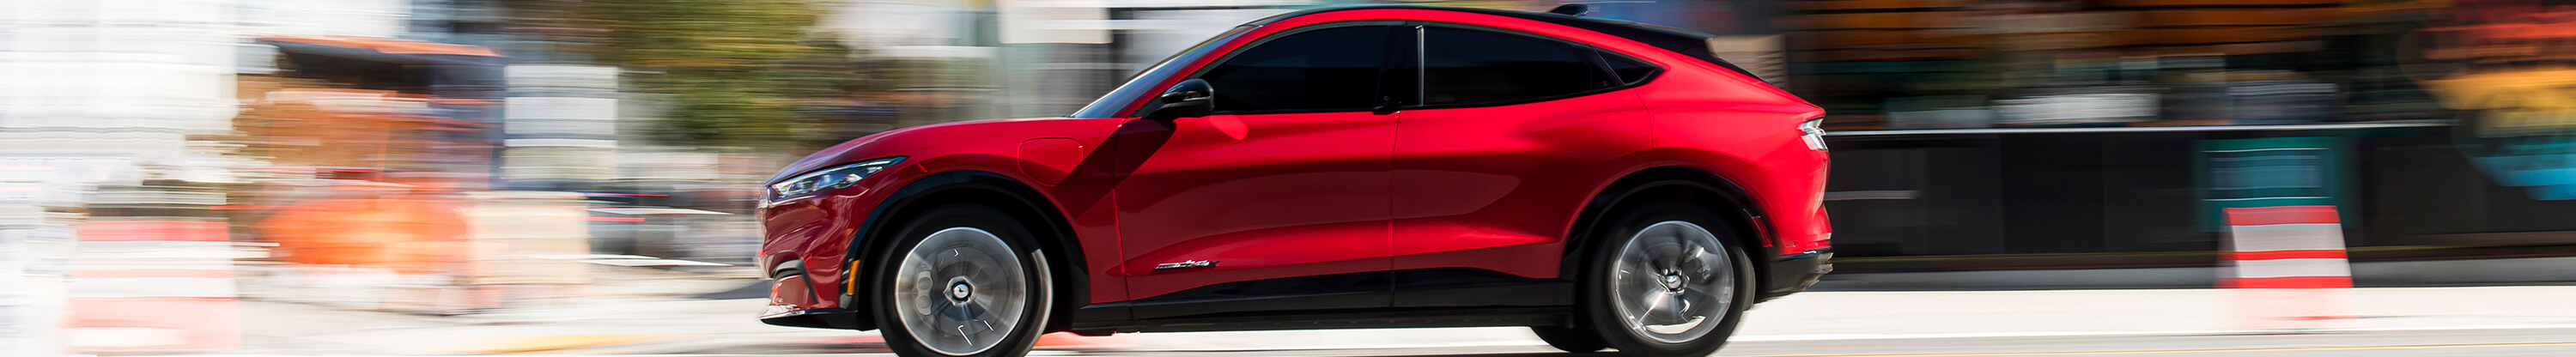 Mustang Mach-E Red